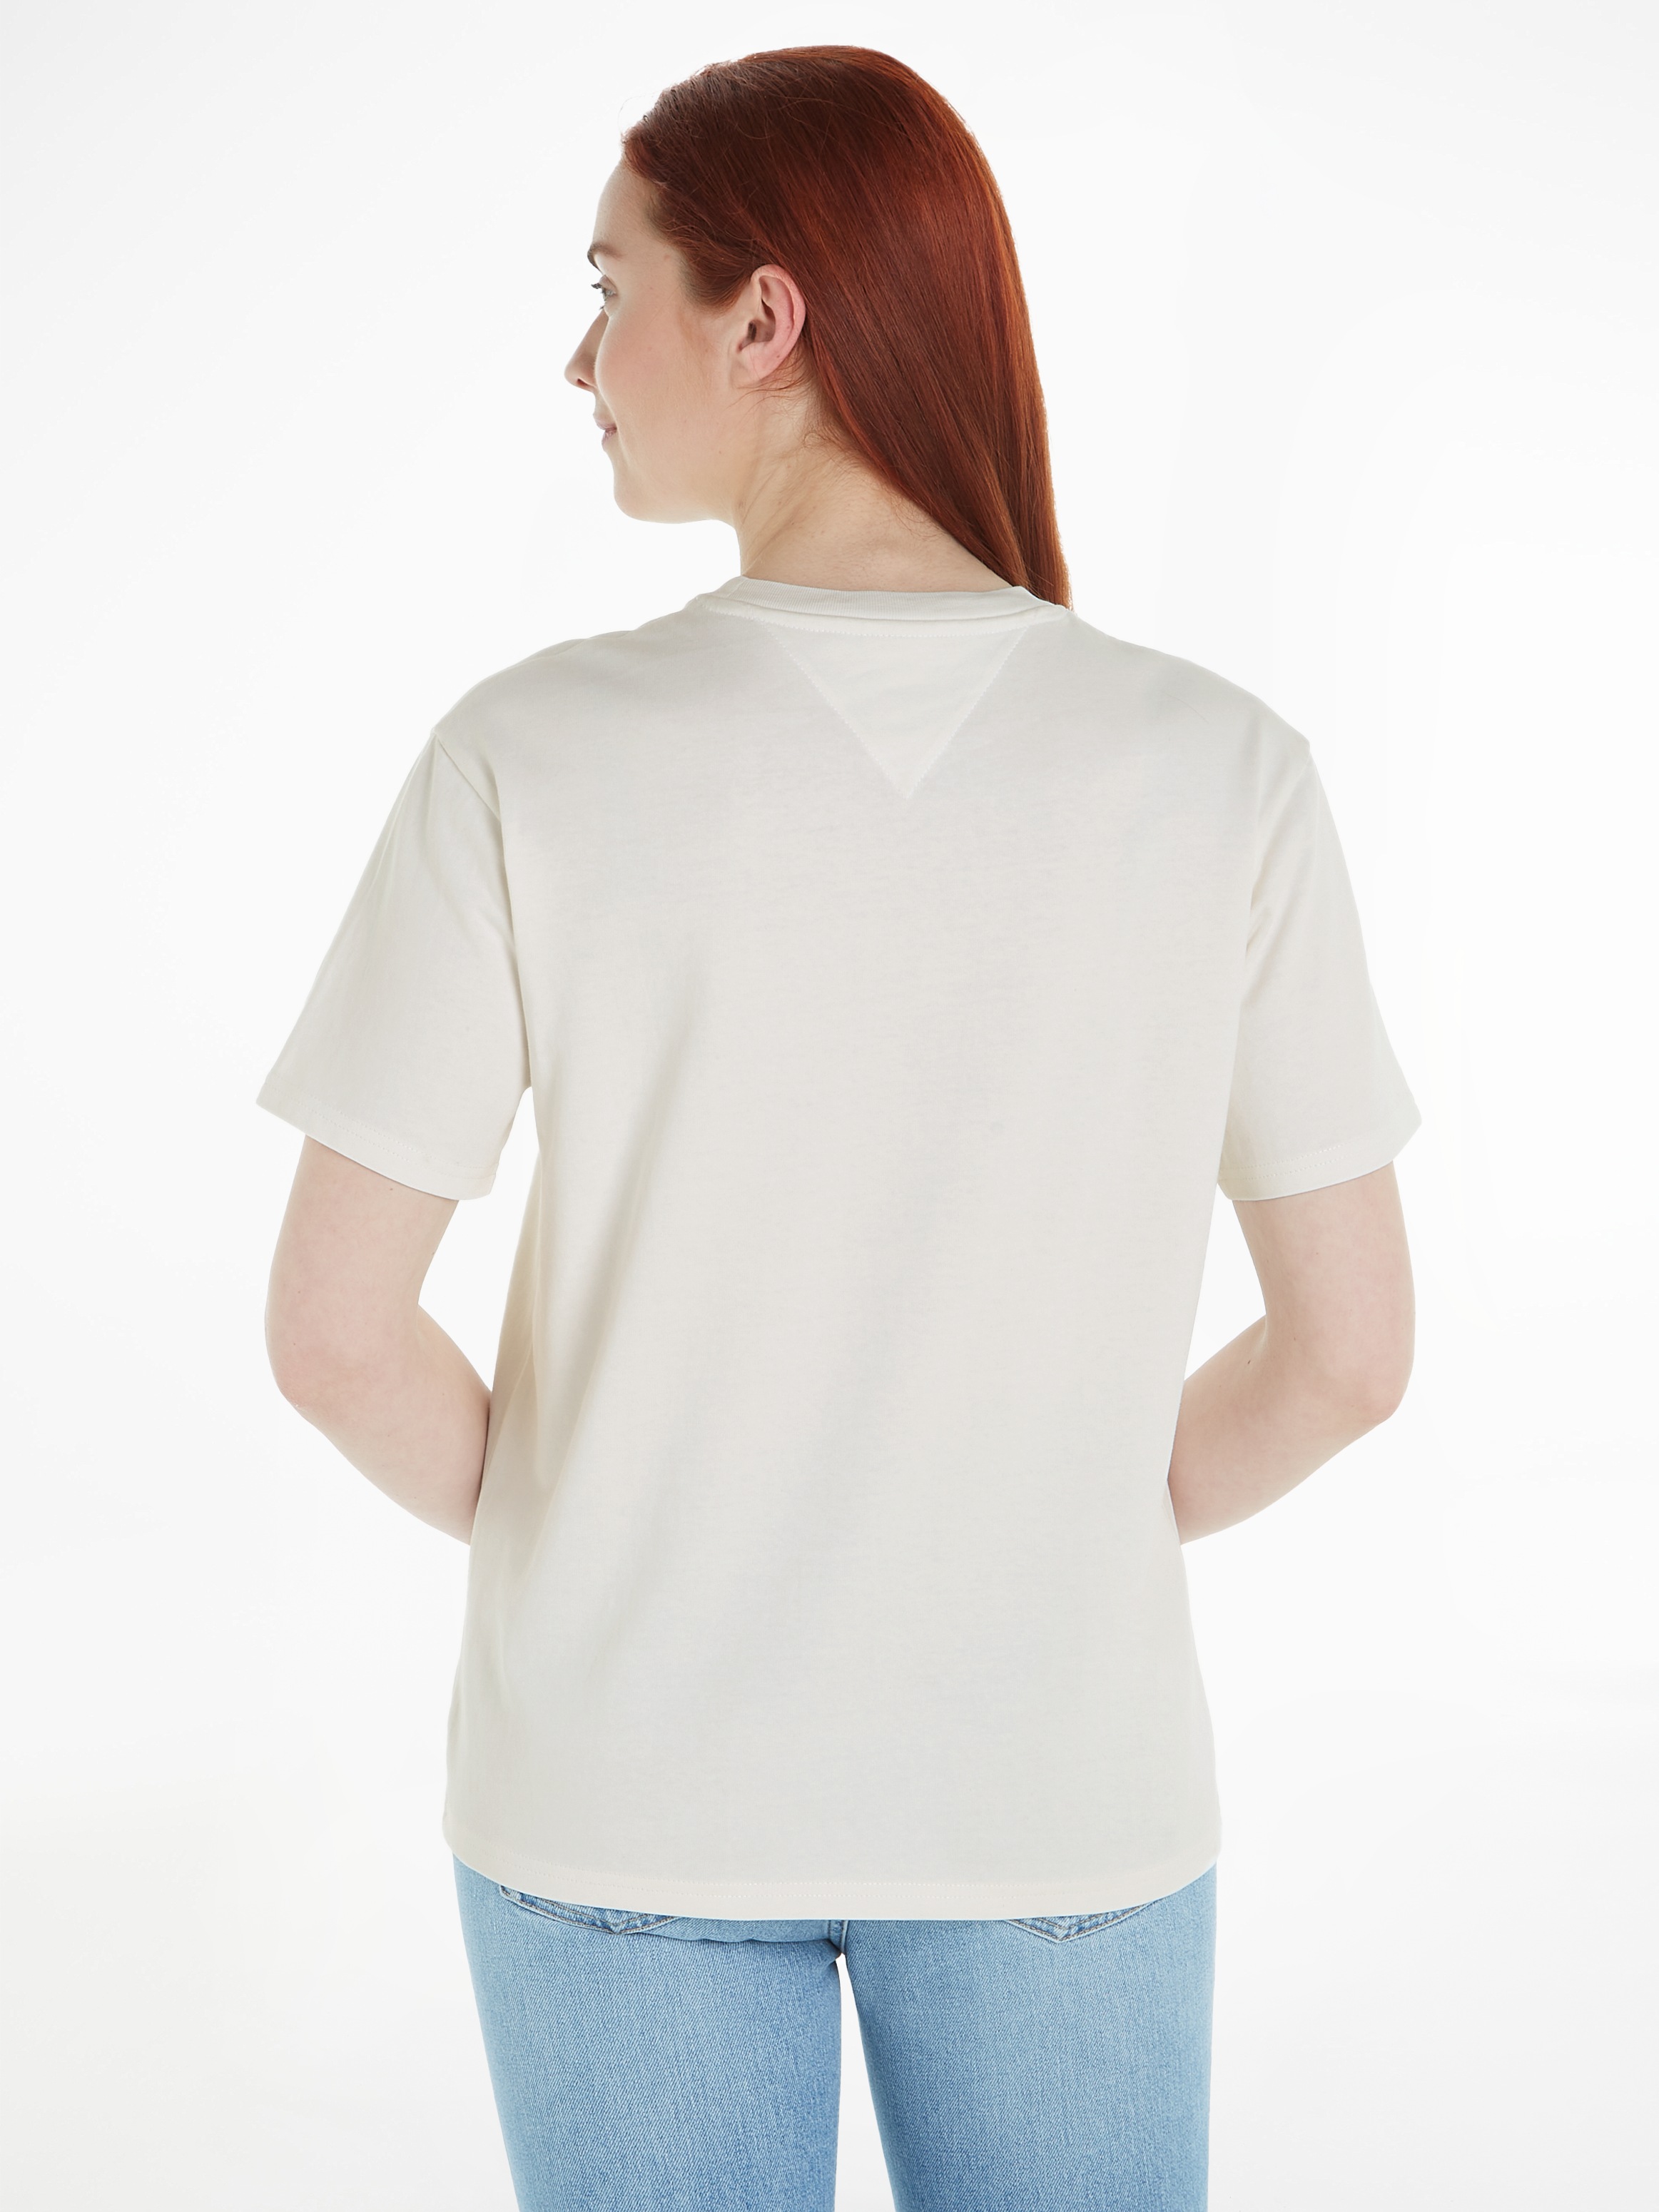 TEE«, Tommy RLX online T-Shirt Jeans bestellen VARSITY mit »TJW Frontprint LUX